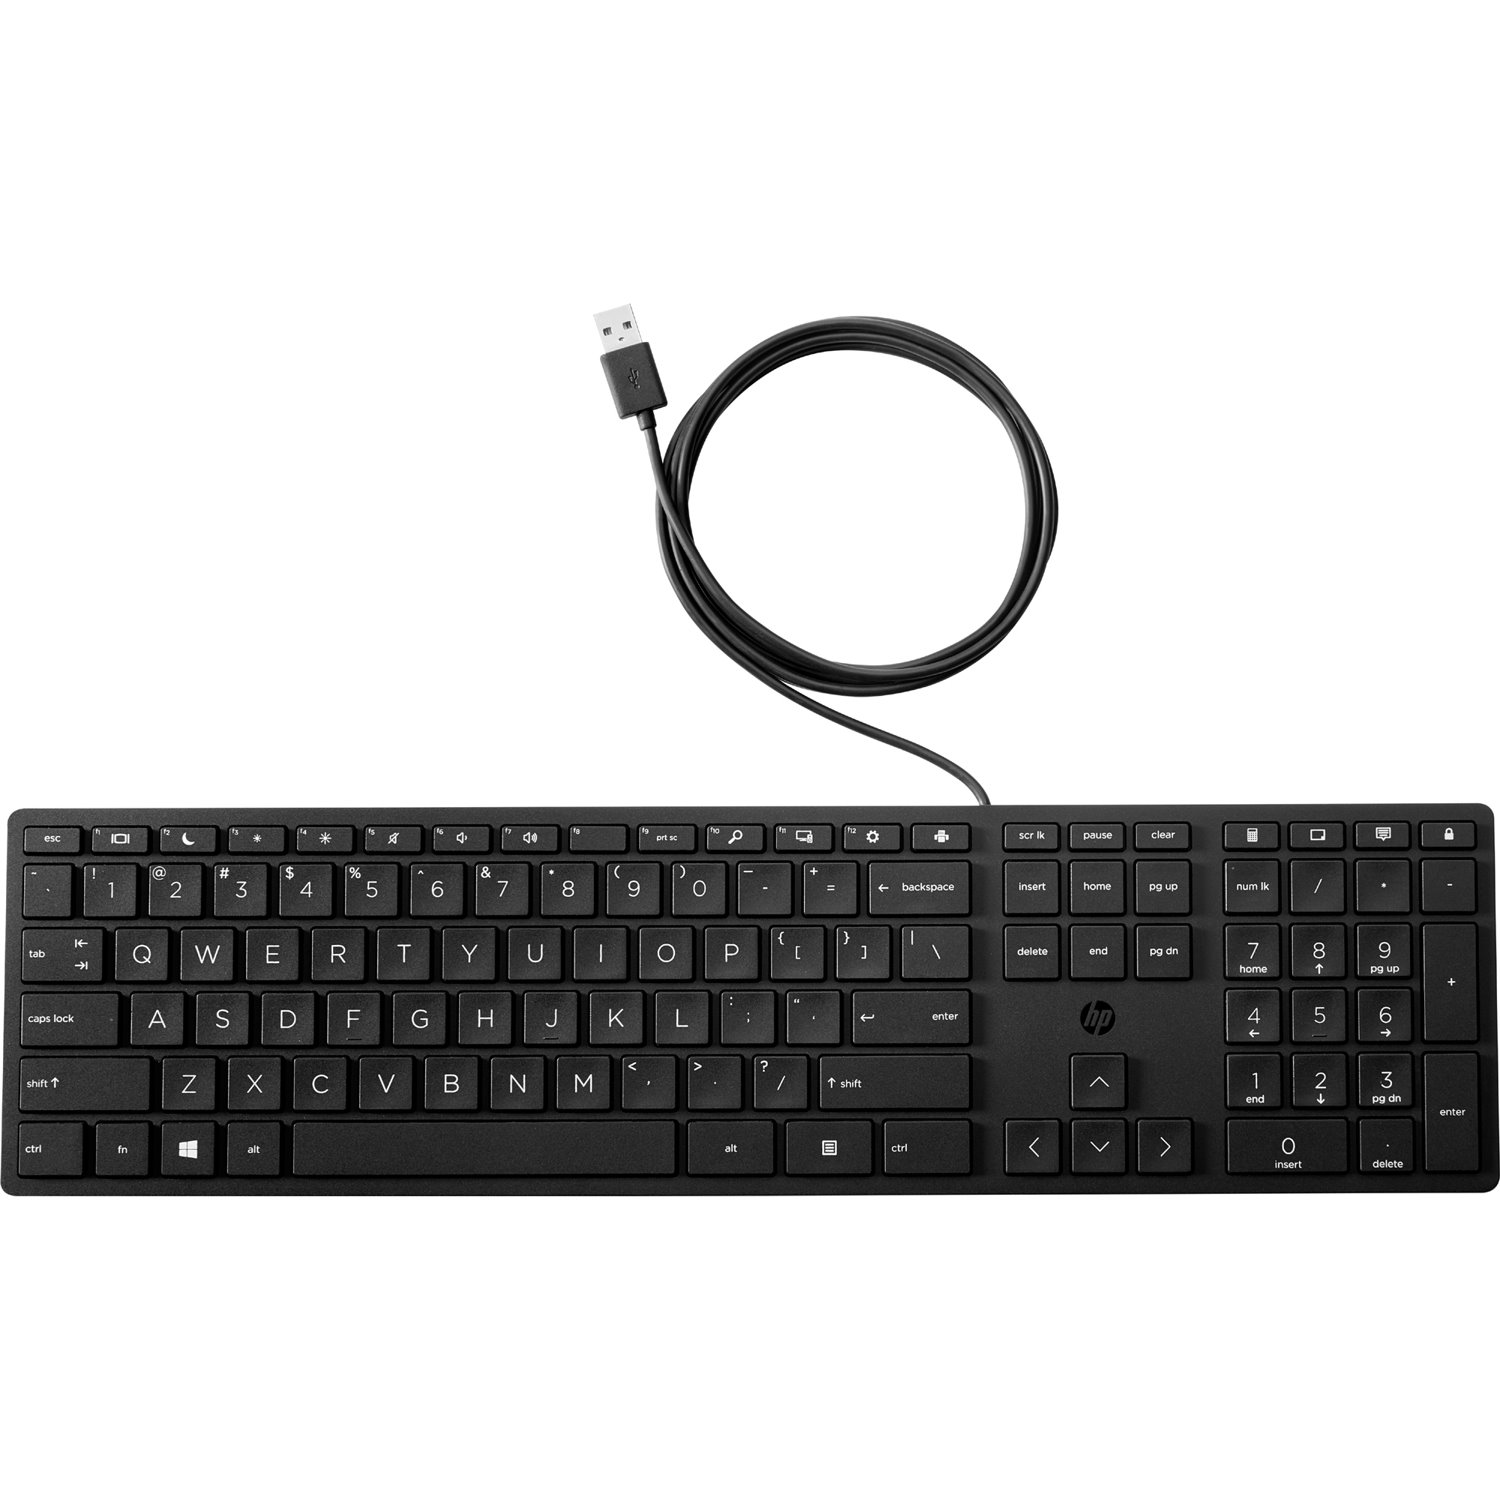 HP Keyboard - Cable Connectivity - USB Interface - English (UK)